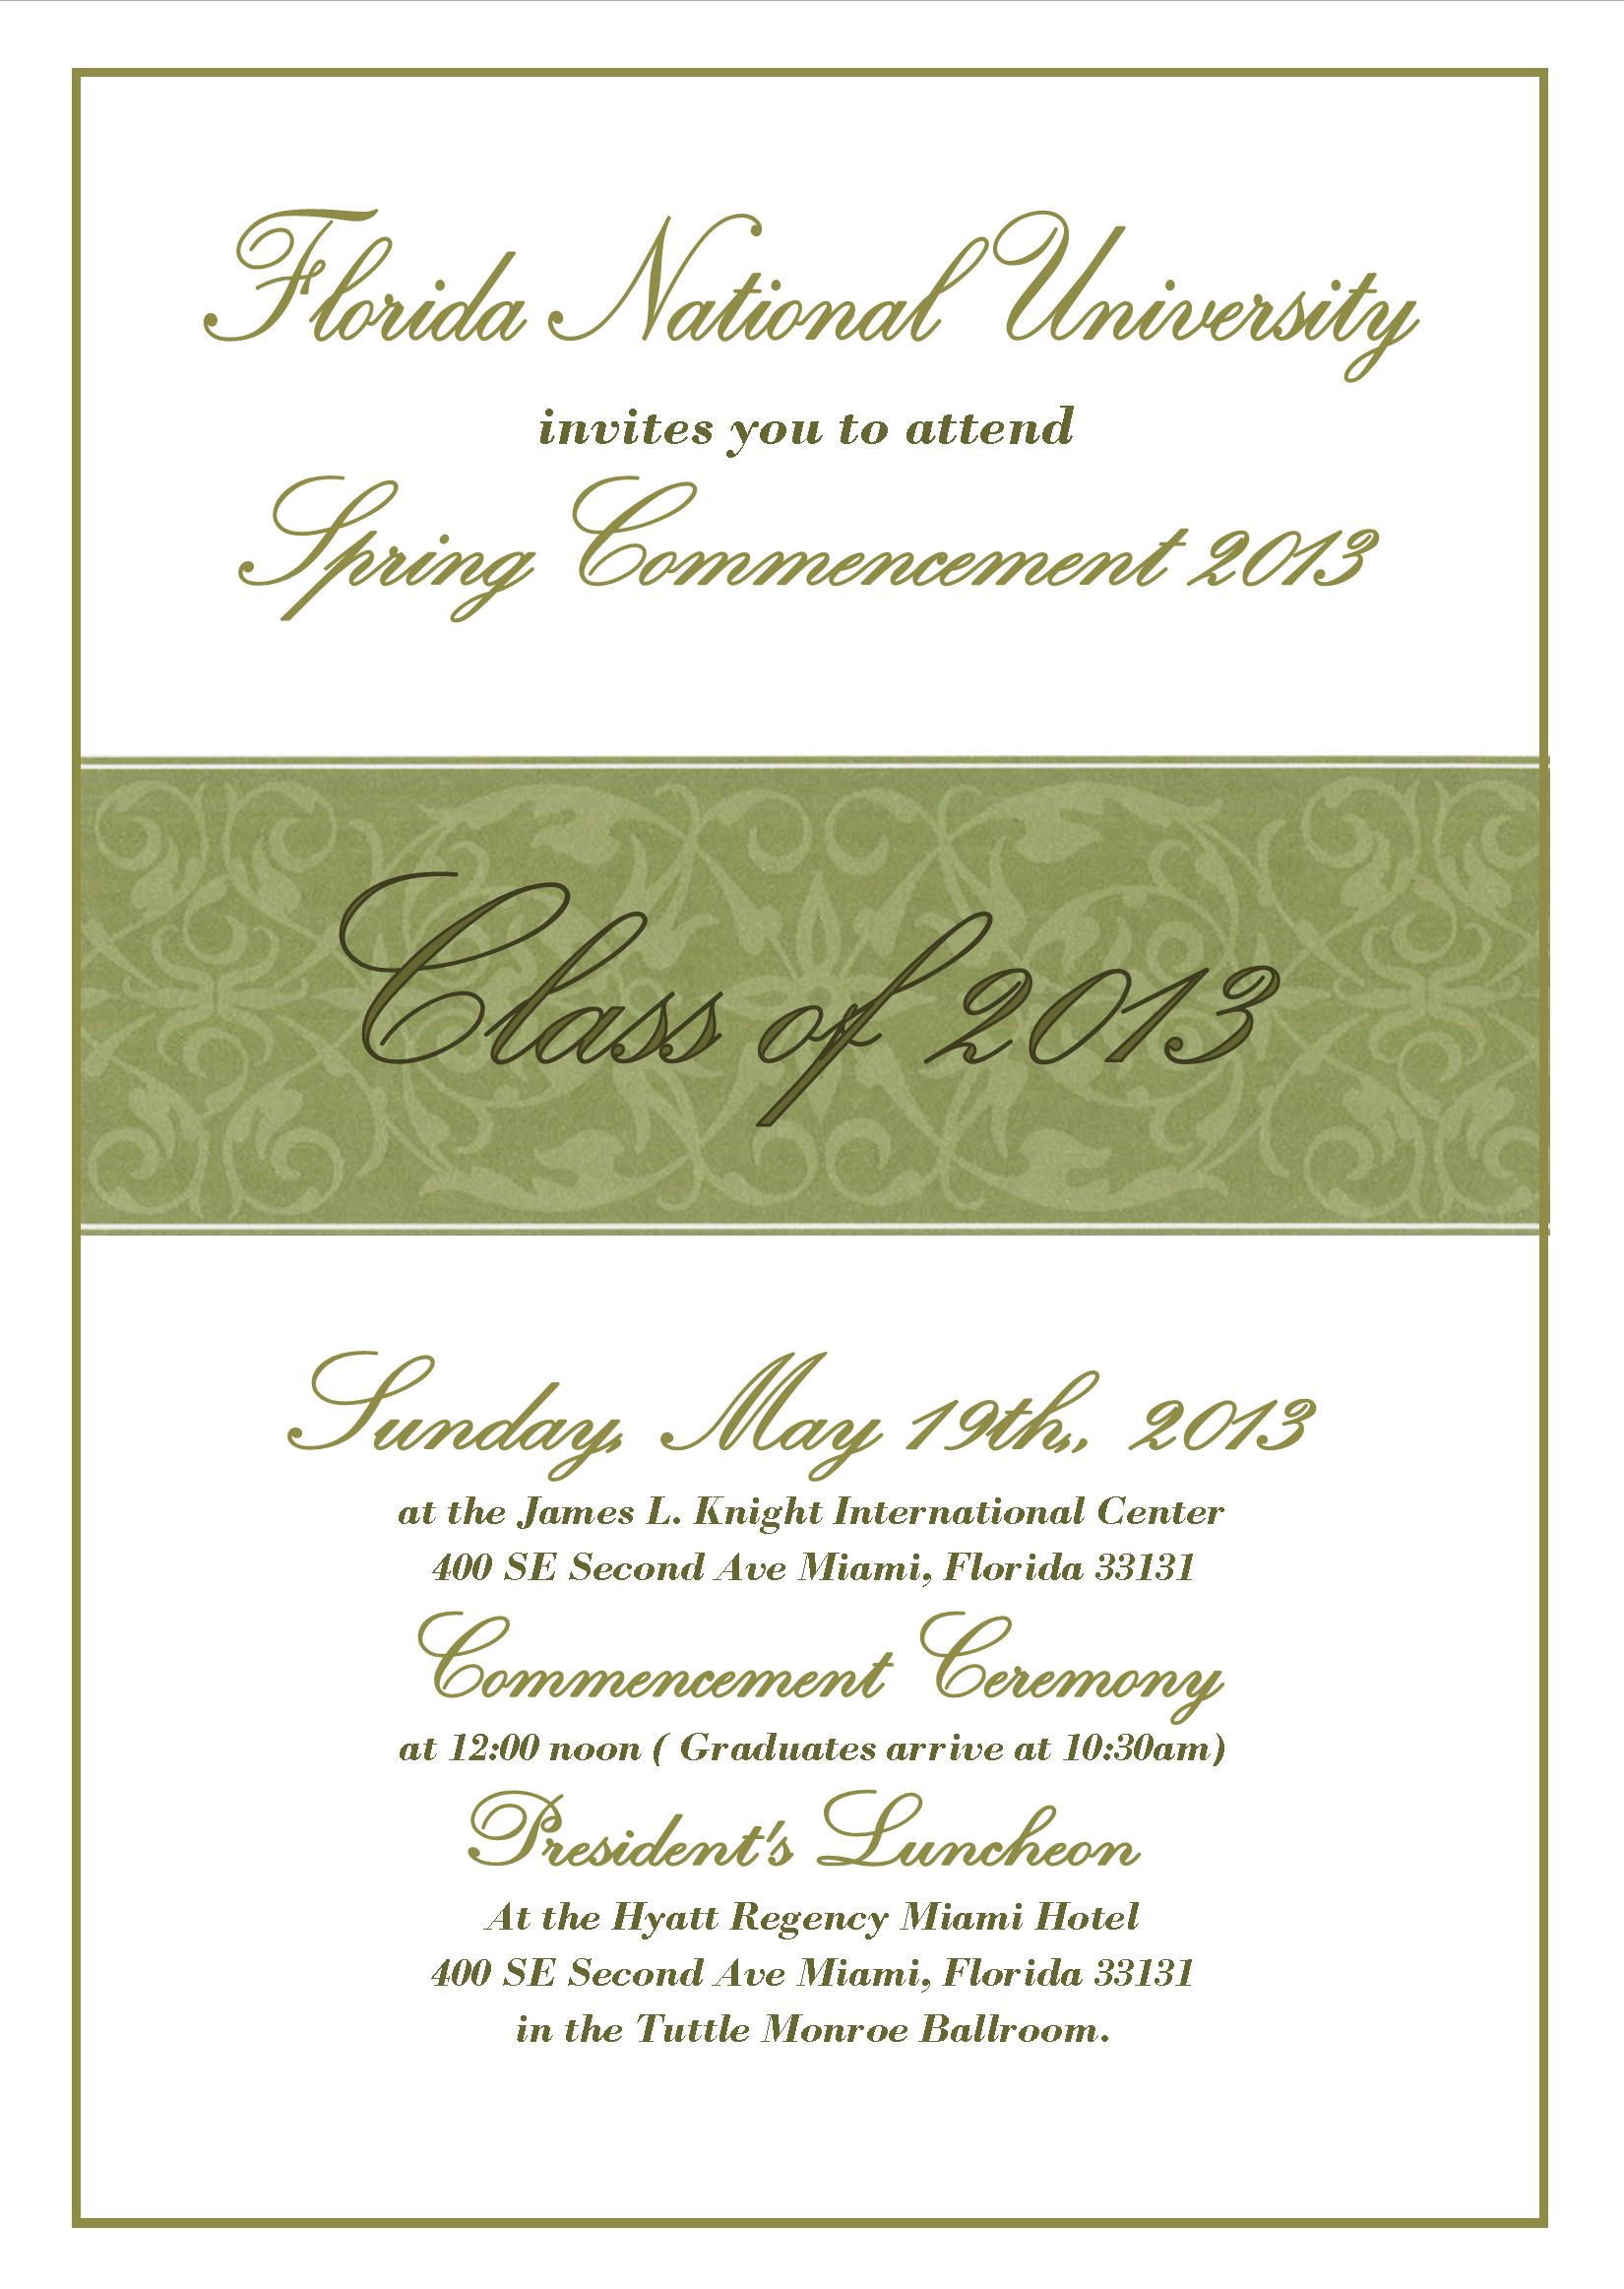 Commencement Ceremony Invitation  Florida National University 